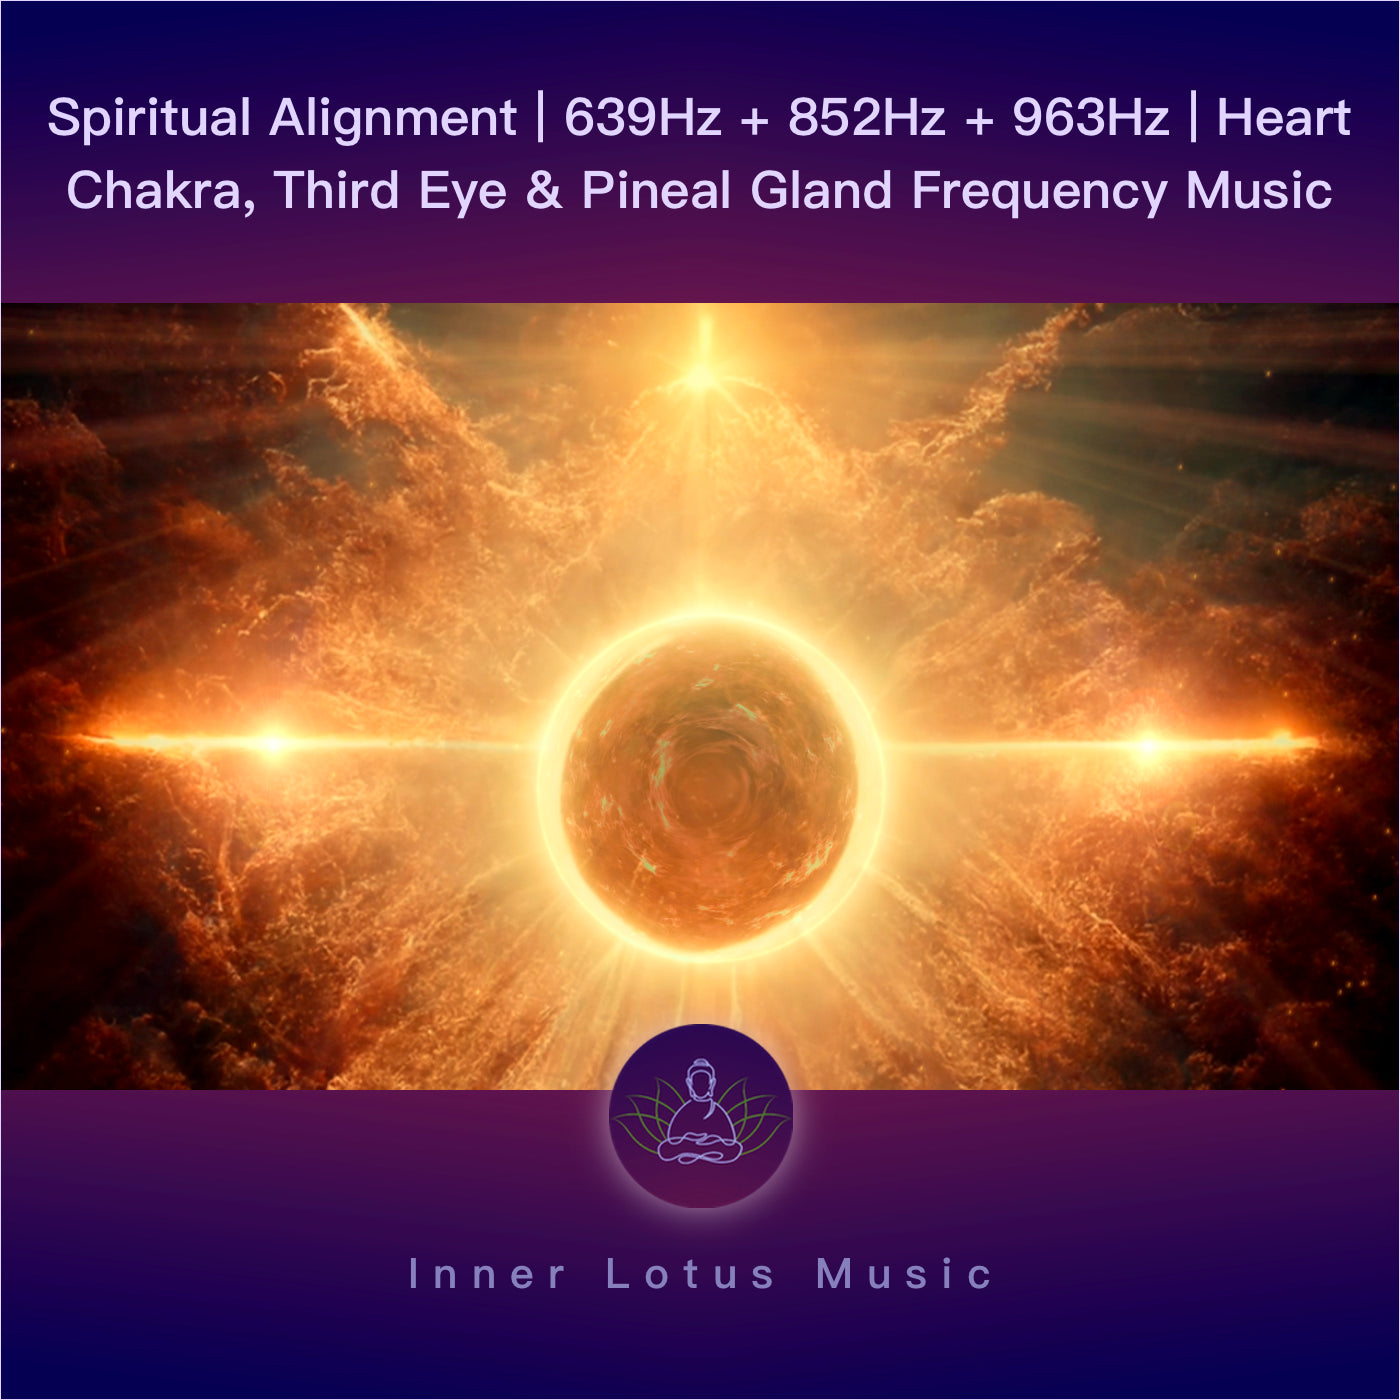 Spiritual Alignment | 639Hz + 852Hz + 963Hz | Heart Chakra, Third Eye & Pineal Gland Frequency Music